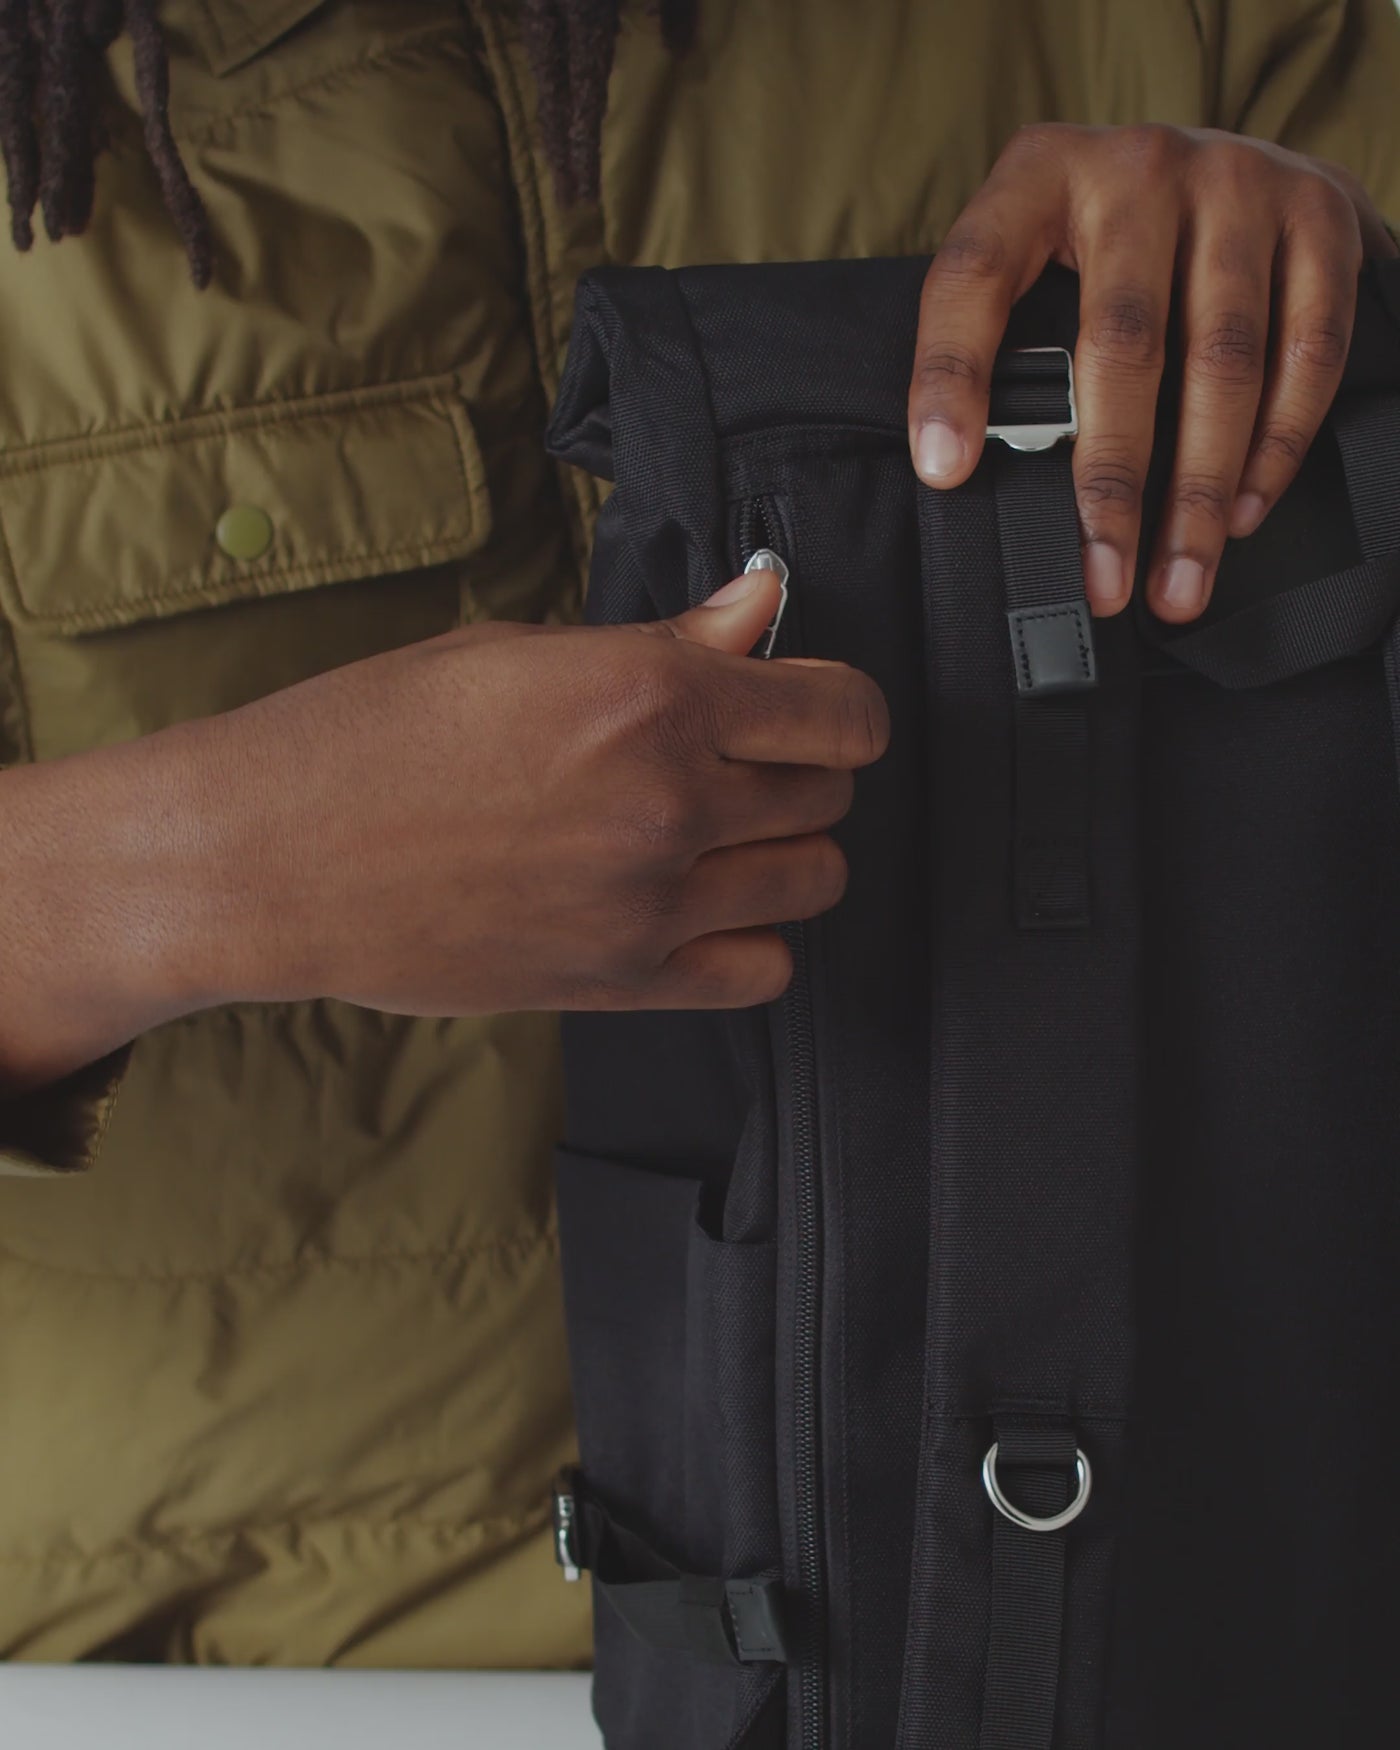 video showcasing the black brent model backpack from Sandqvist